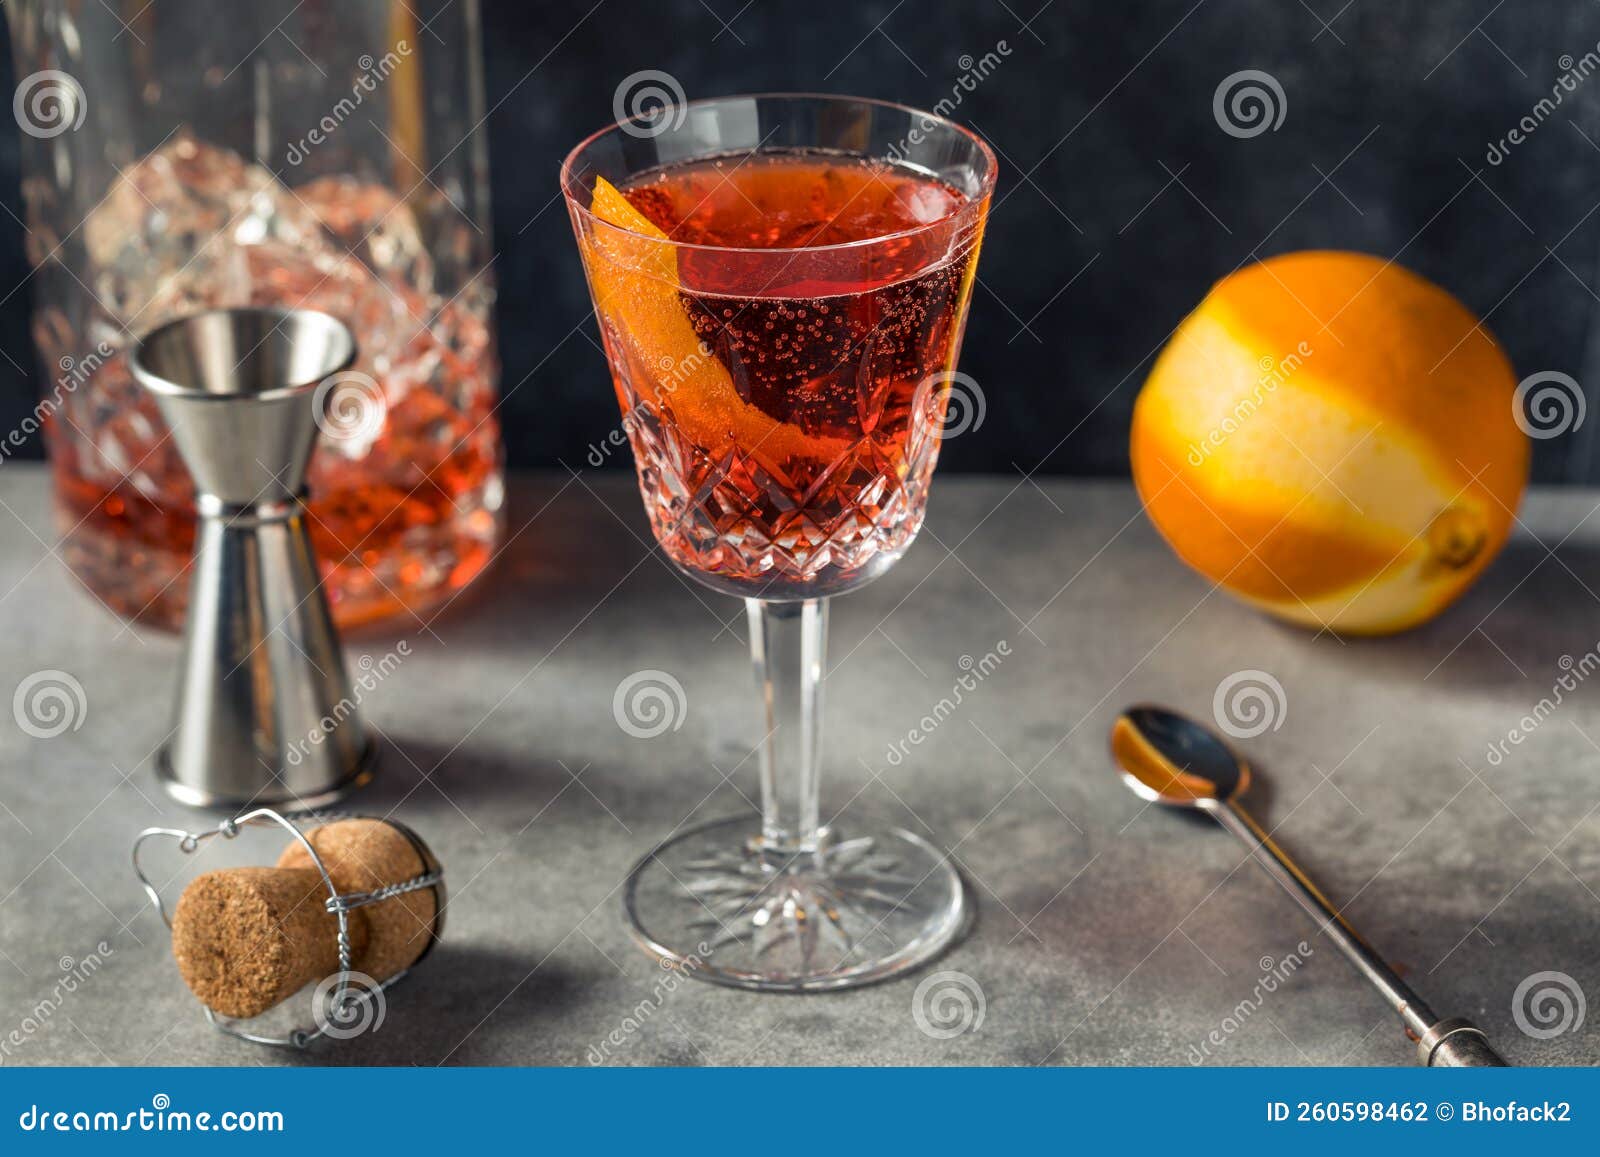 boozy refreshing negroni sbagliato cocktail